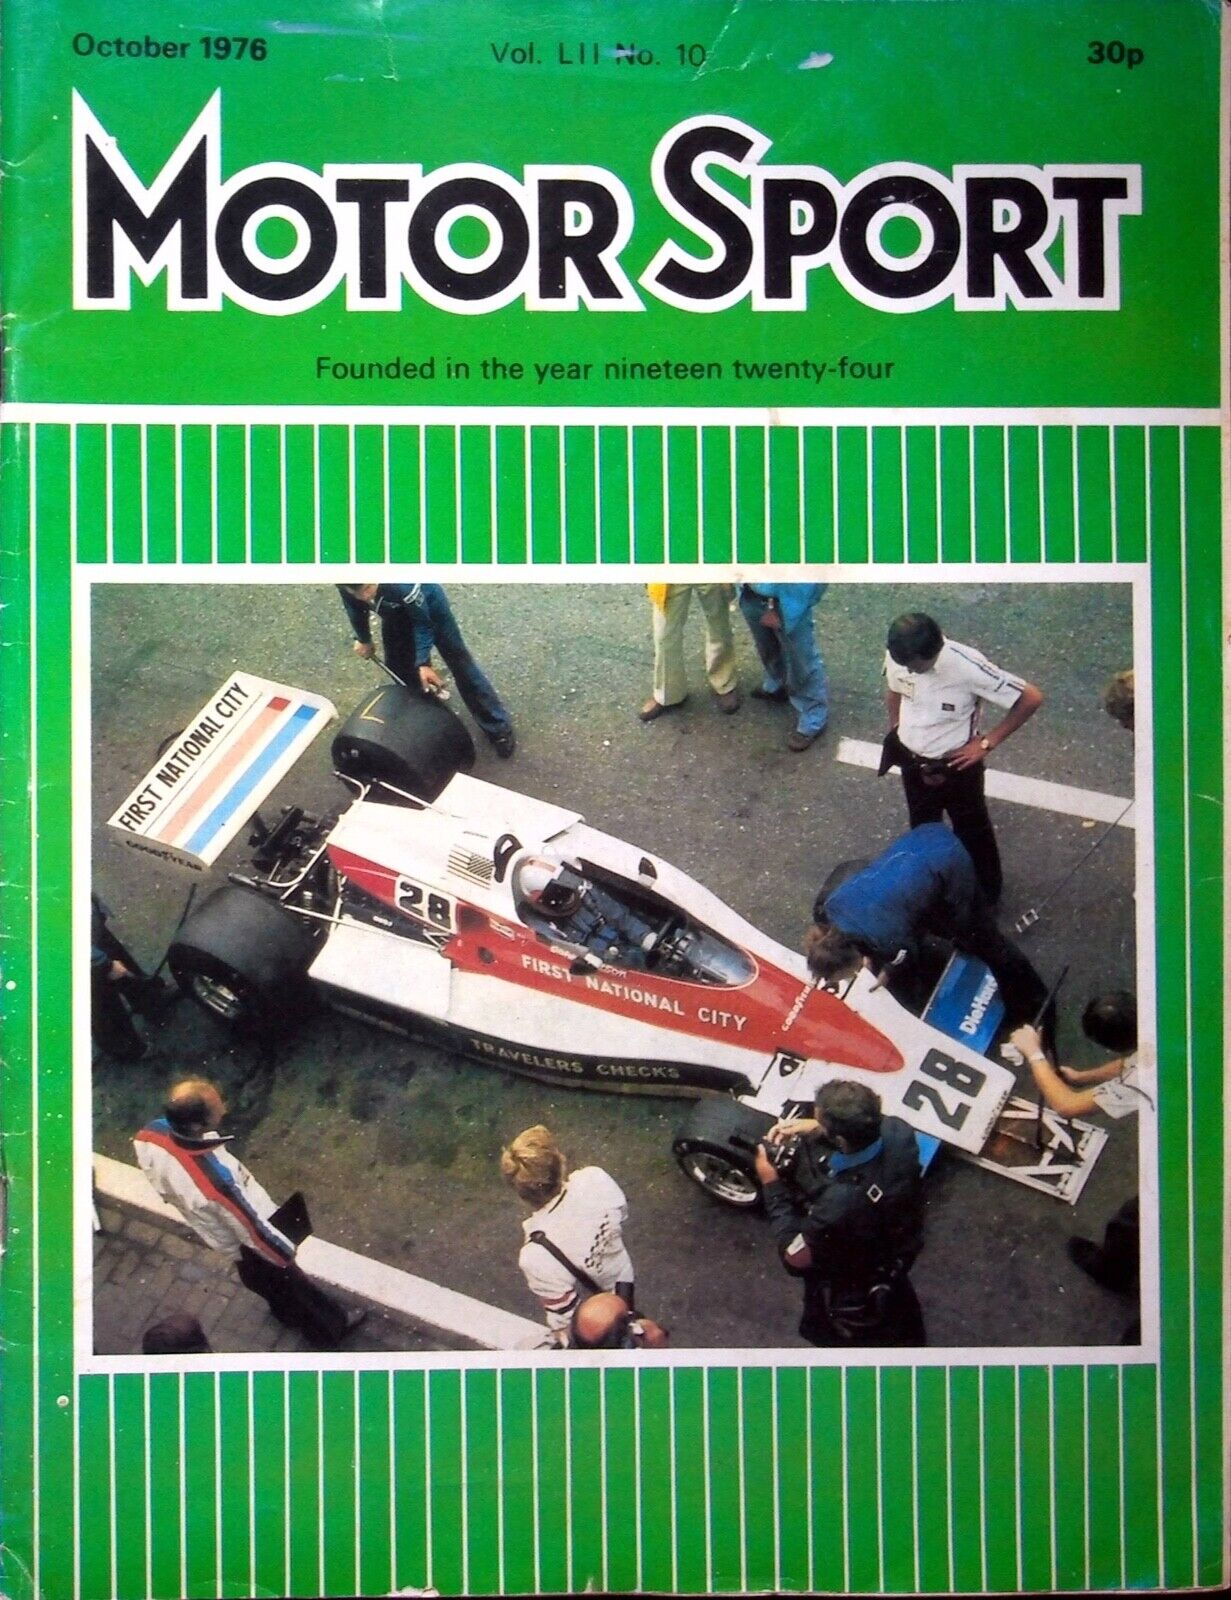 VINTAGE MOTOR SPORT MAGAZINE, OCTOBER 1976 VOL. LII NO. 10